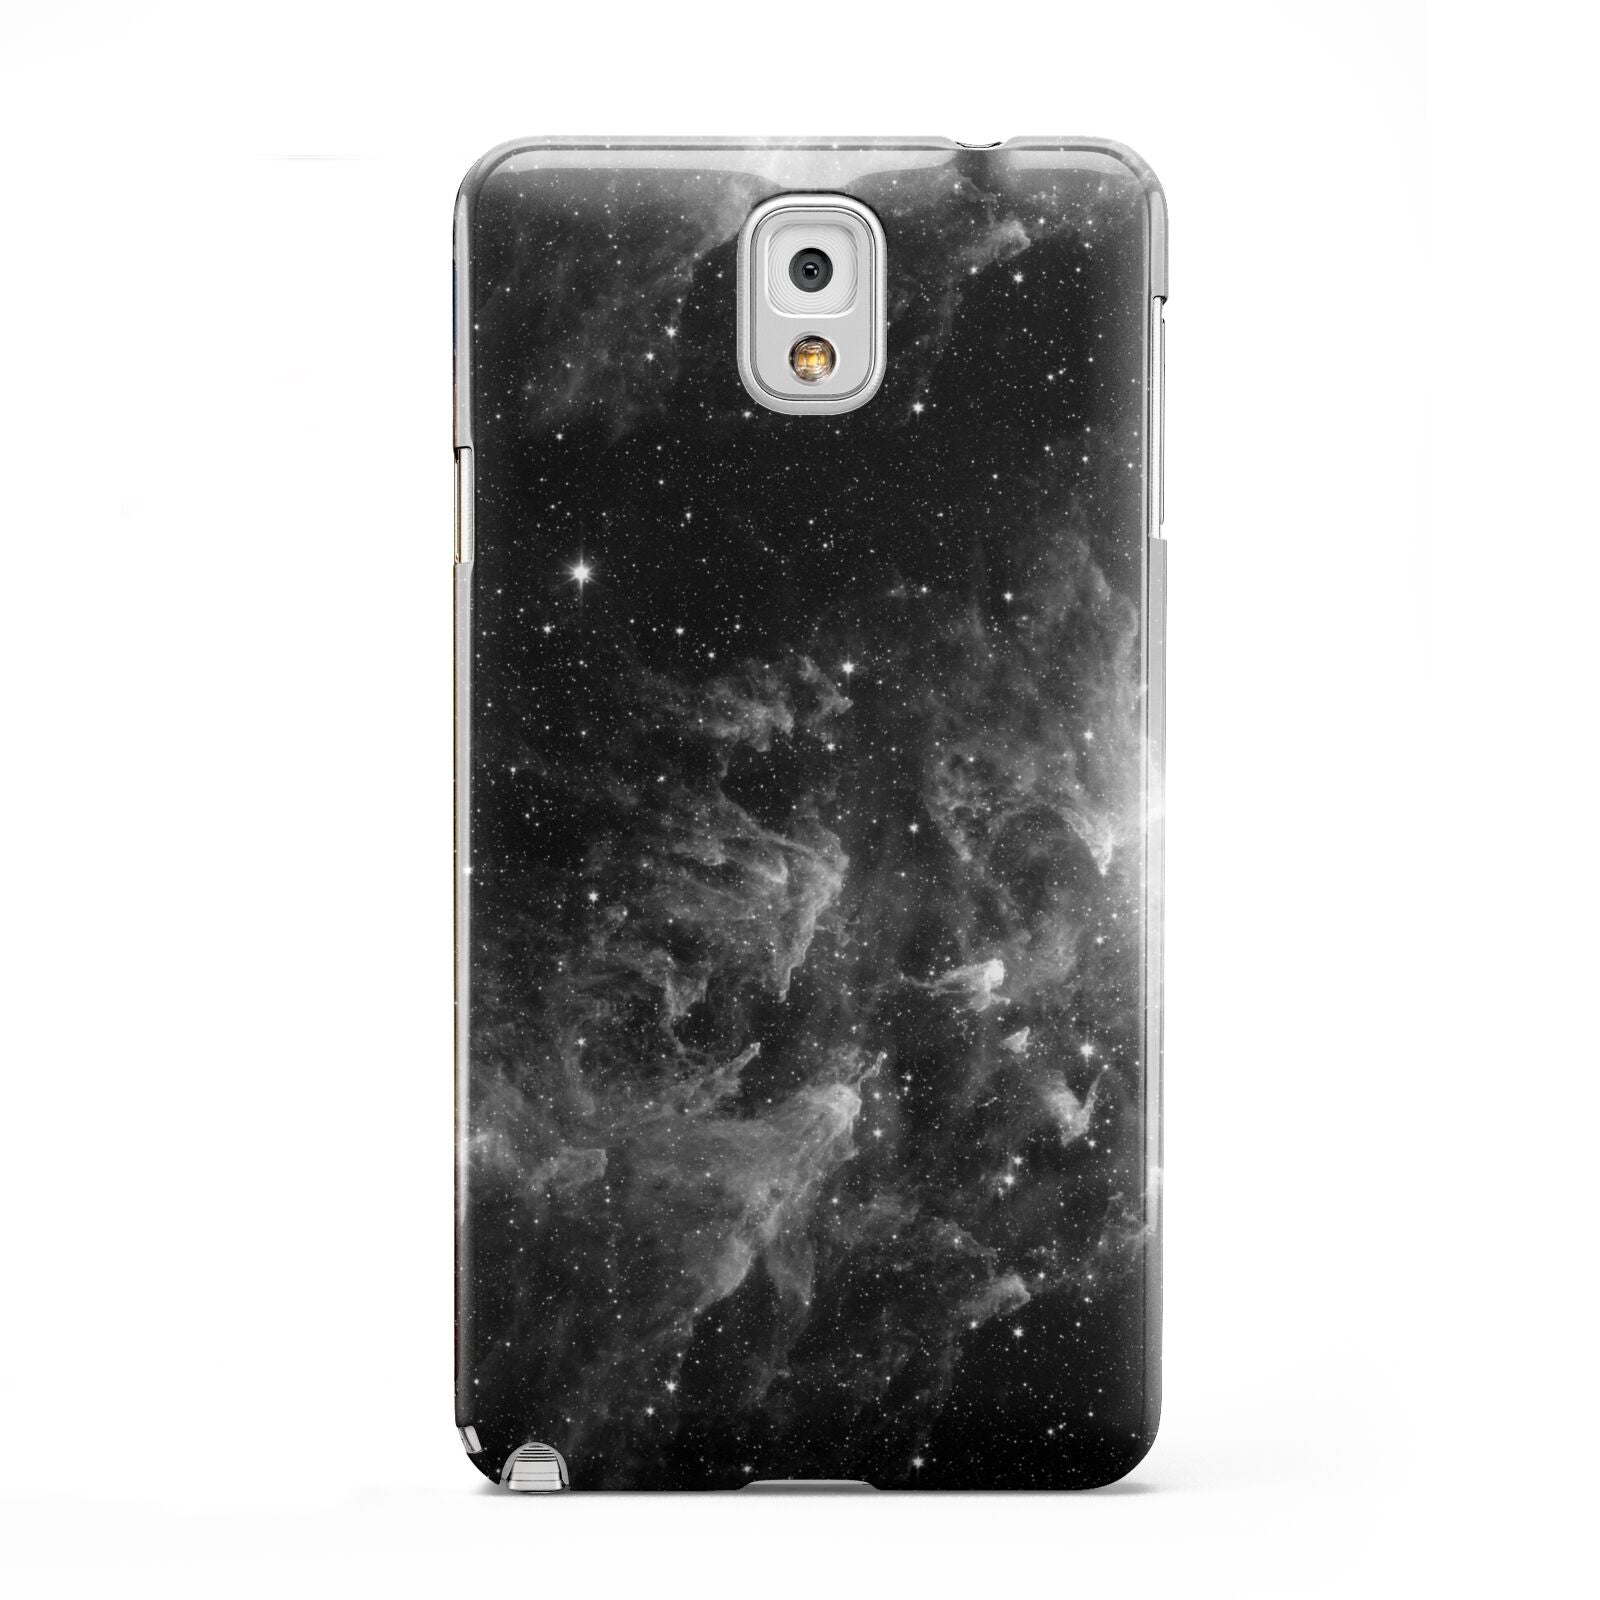 Black Space Samsung Galaxy Note 3 Case